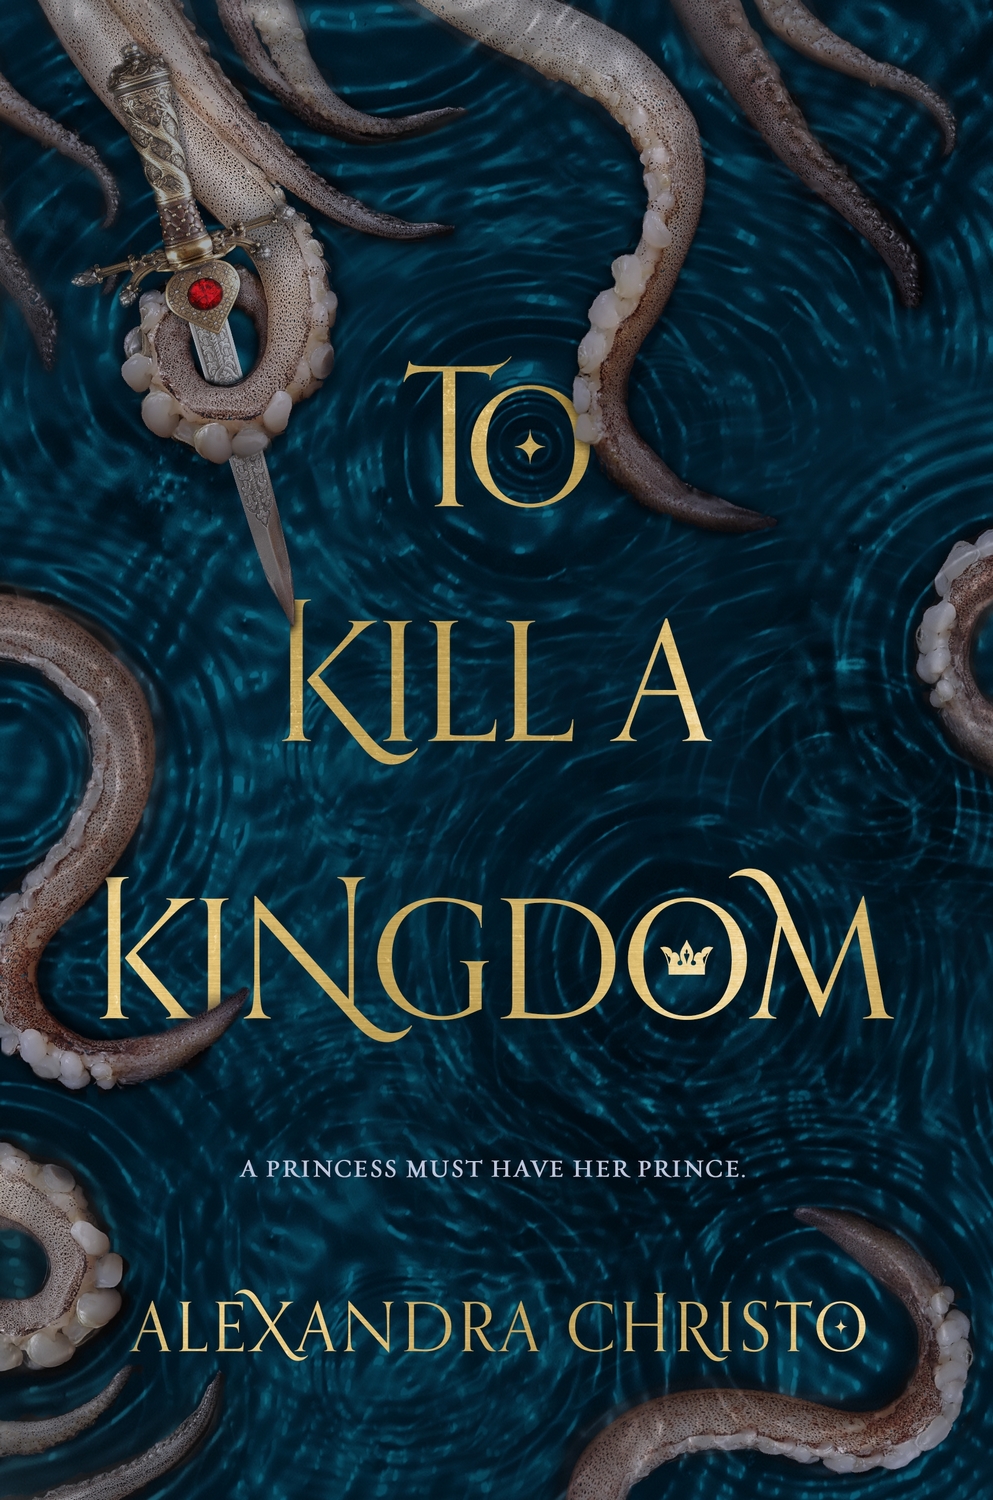 Alexandra Christo: To kill a kingdom (2018, Feiwel & Friends)